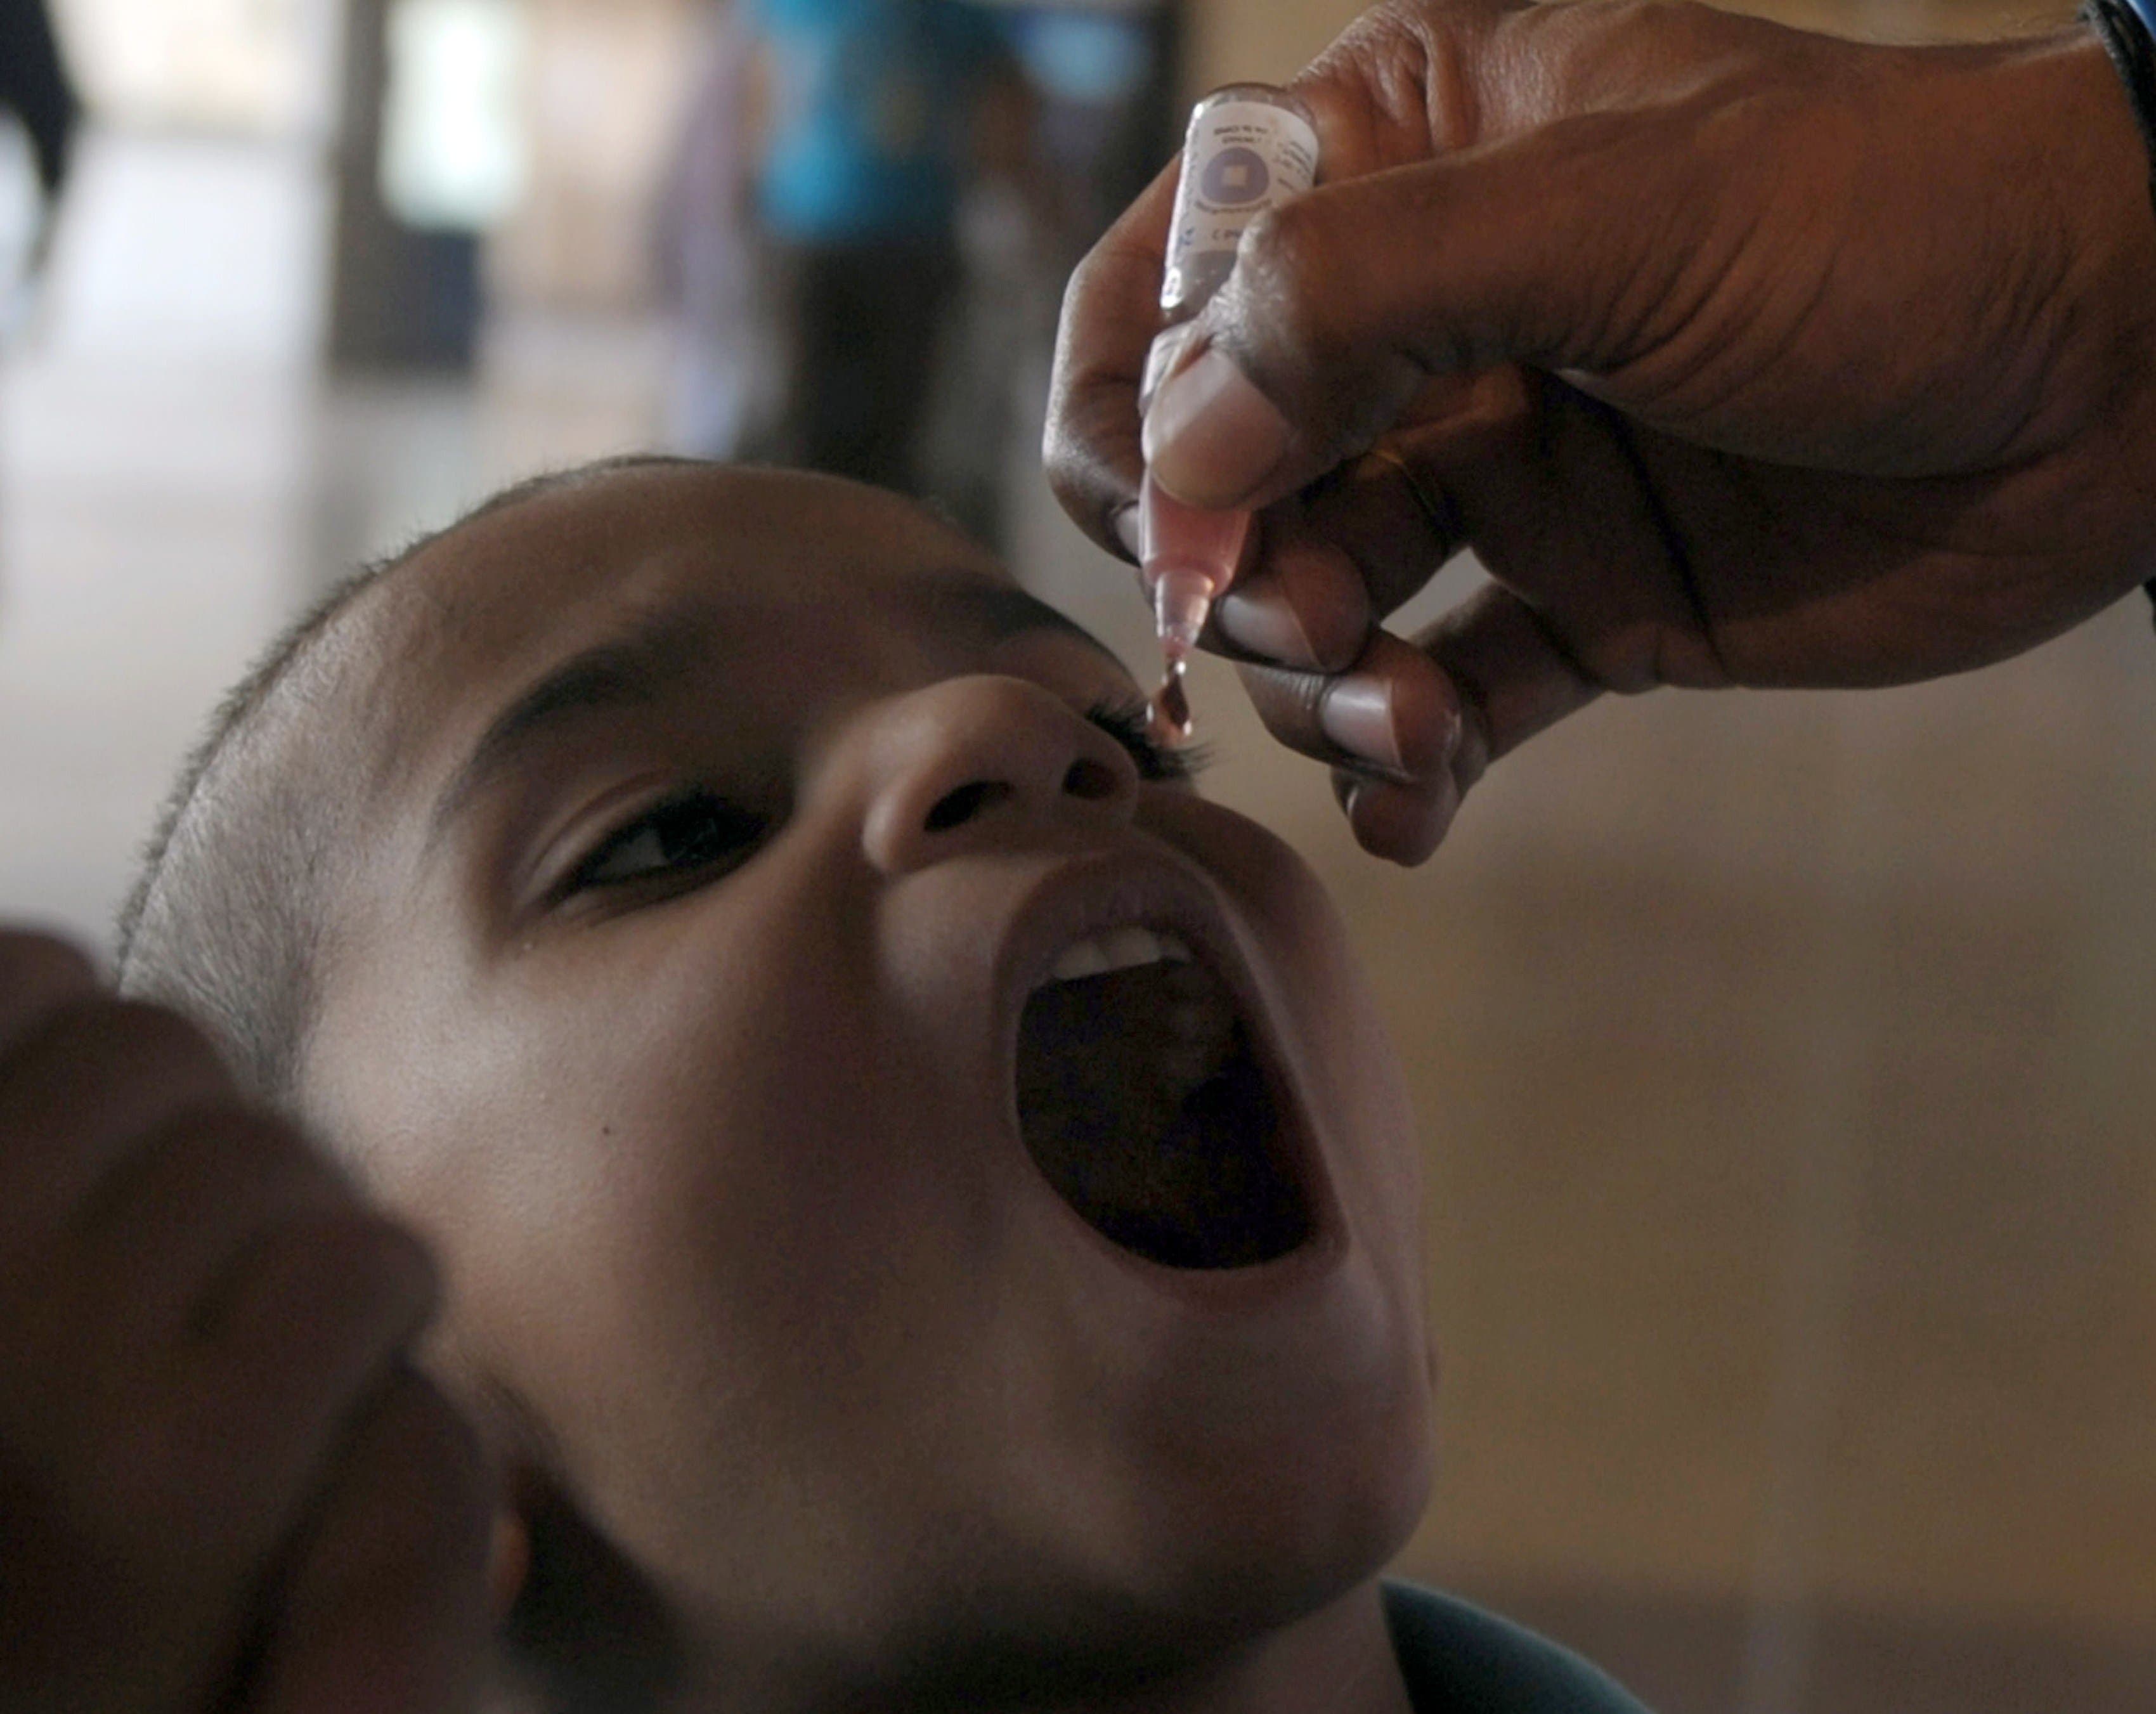 Polio vaccinations surge in Pakistan